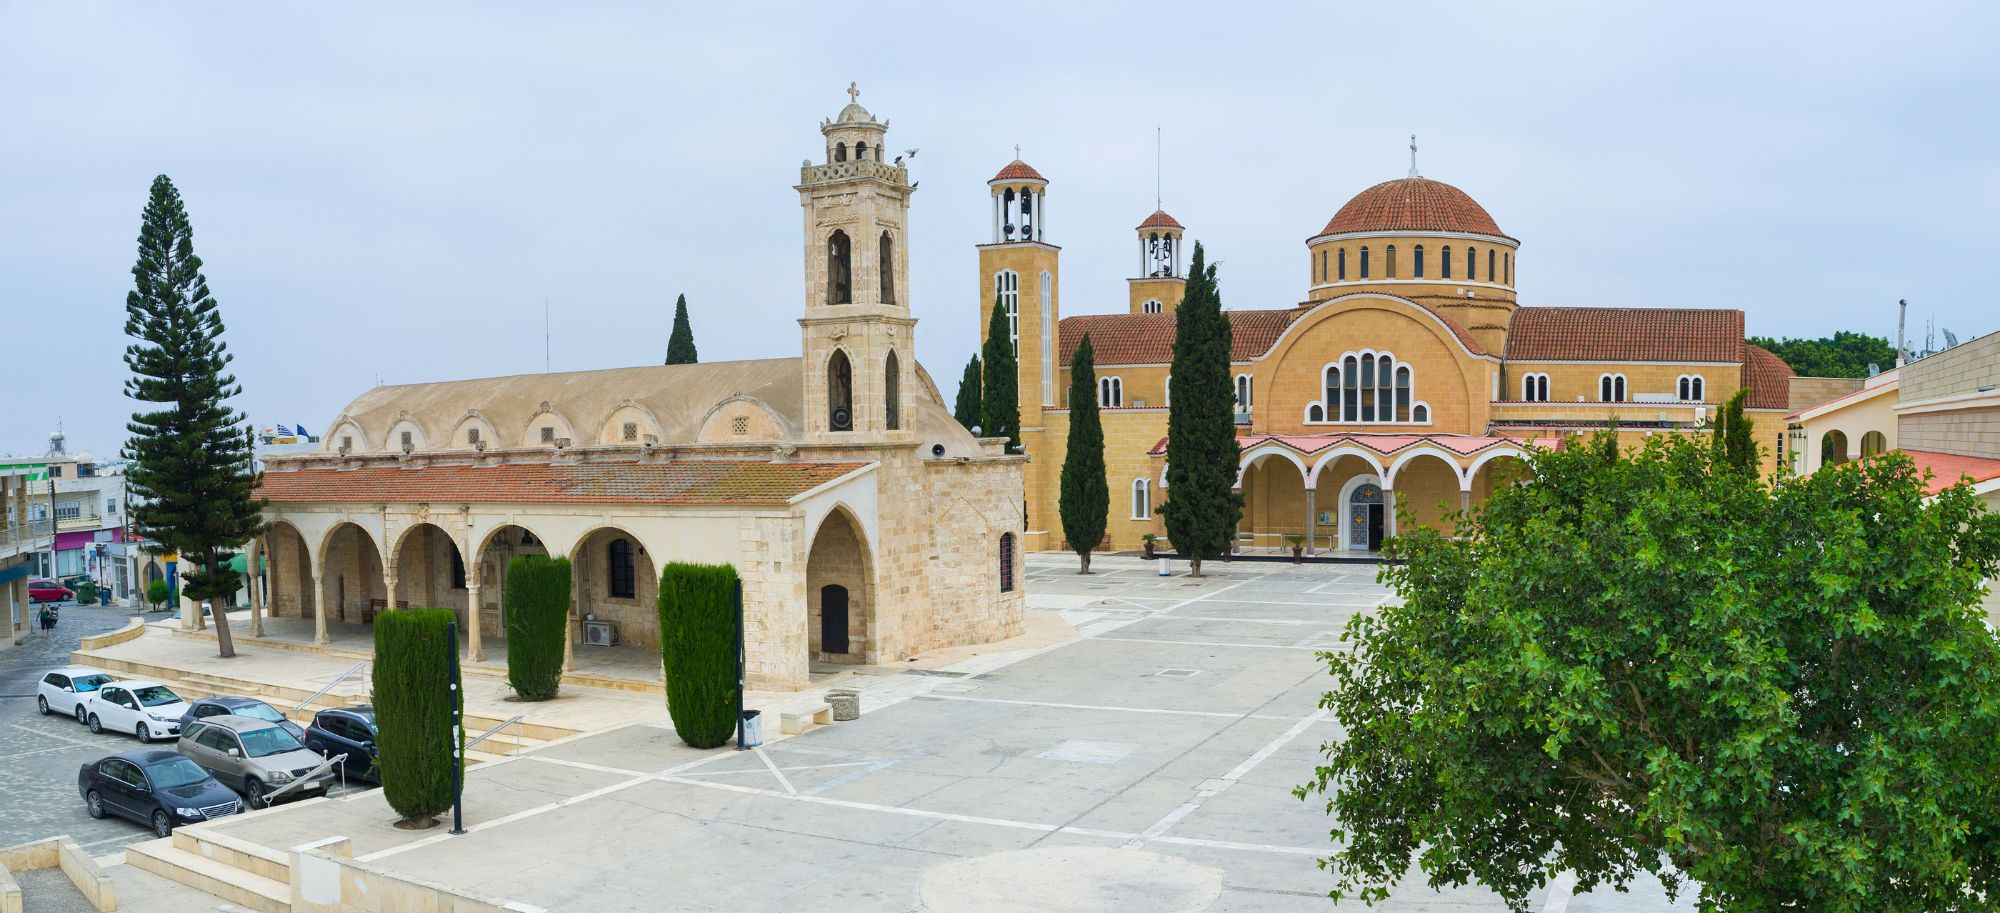 the cathedral squarejpg Coronavirus, Nea Ammochostos, Nea Famagusta, Civil Weddings, Reception Venues